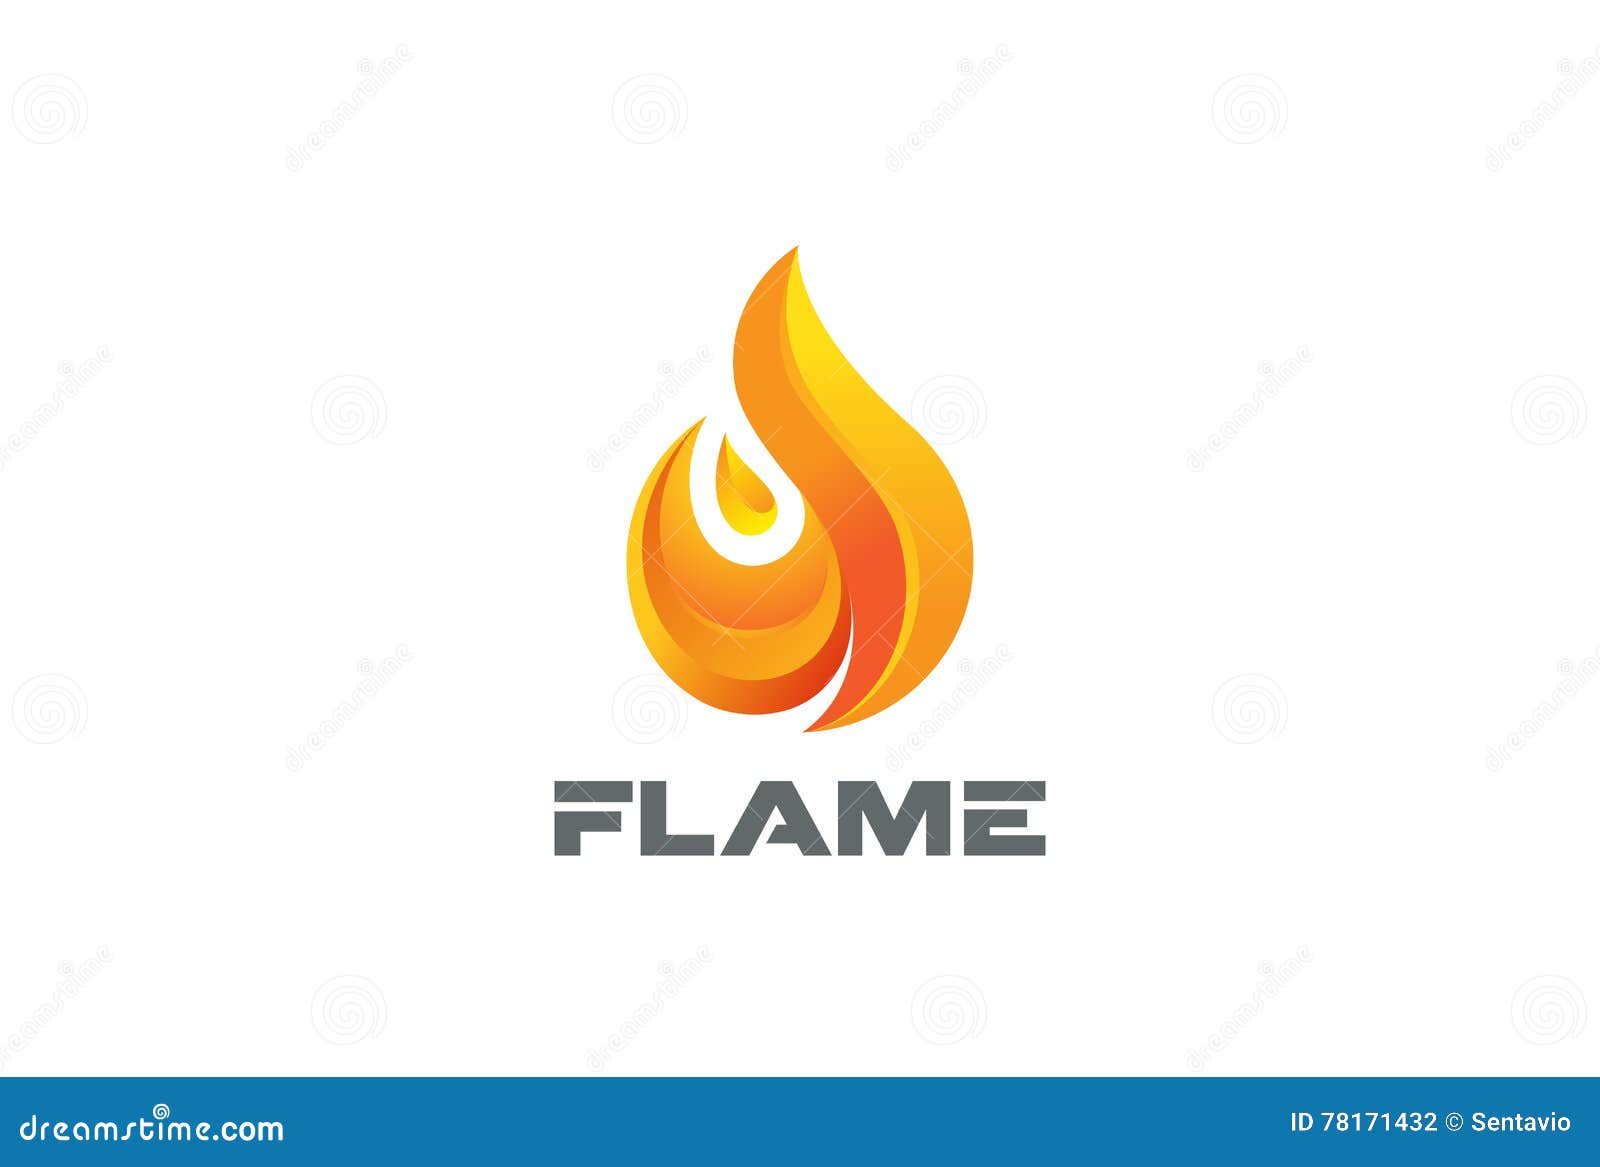 fire flame logo   template.